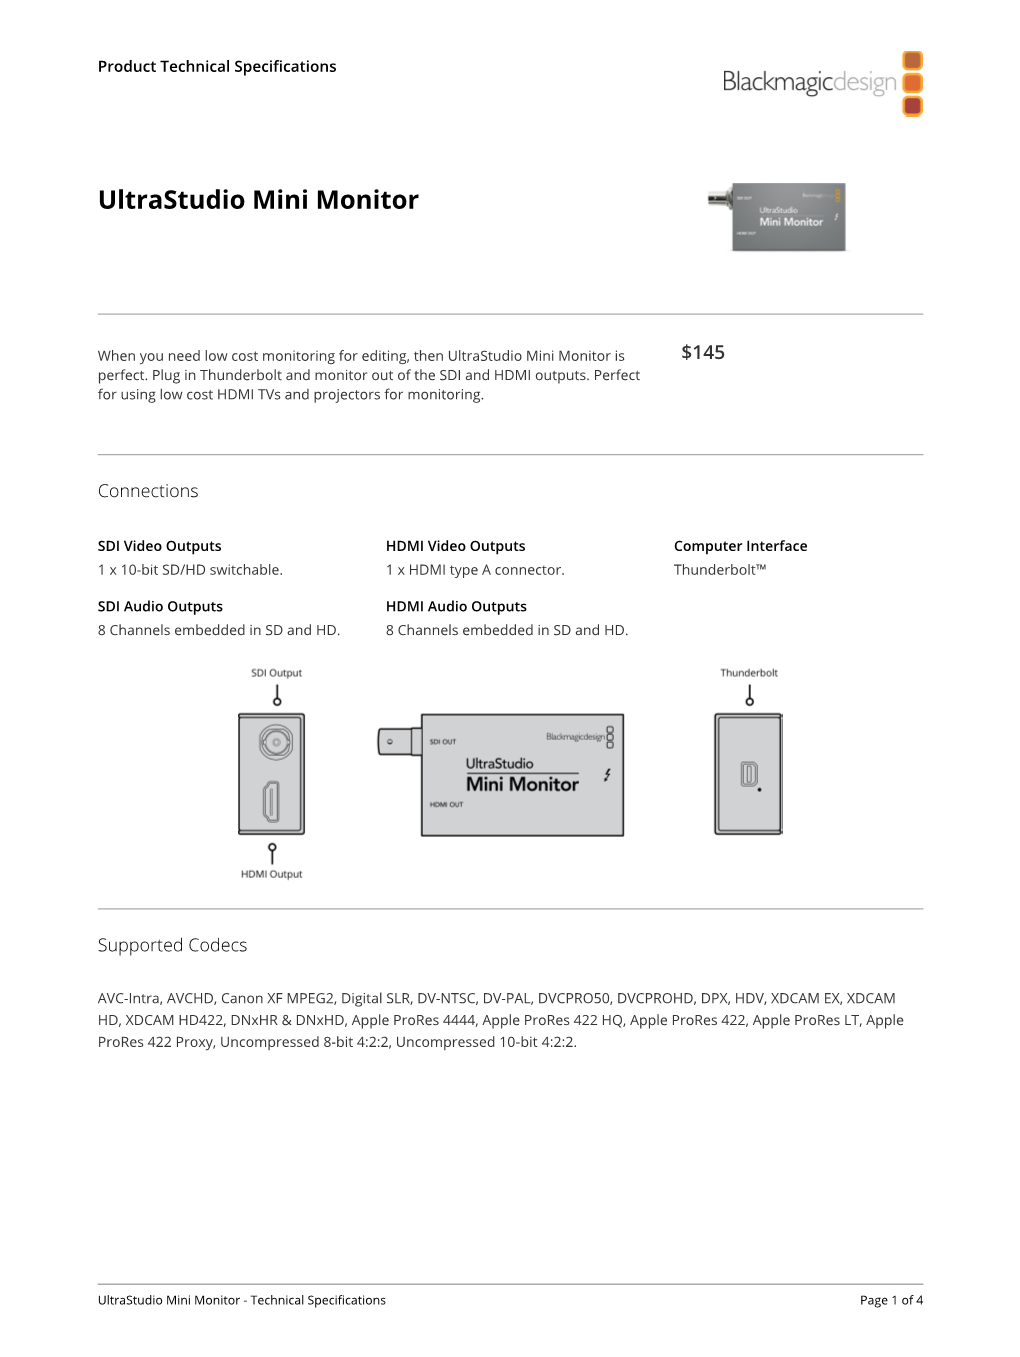 Ultrastudio Mini Monitor